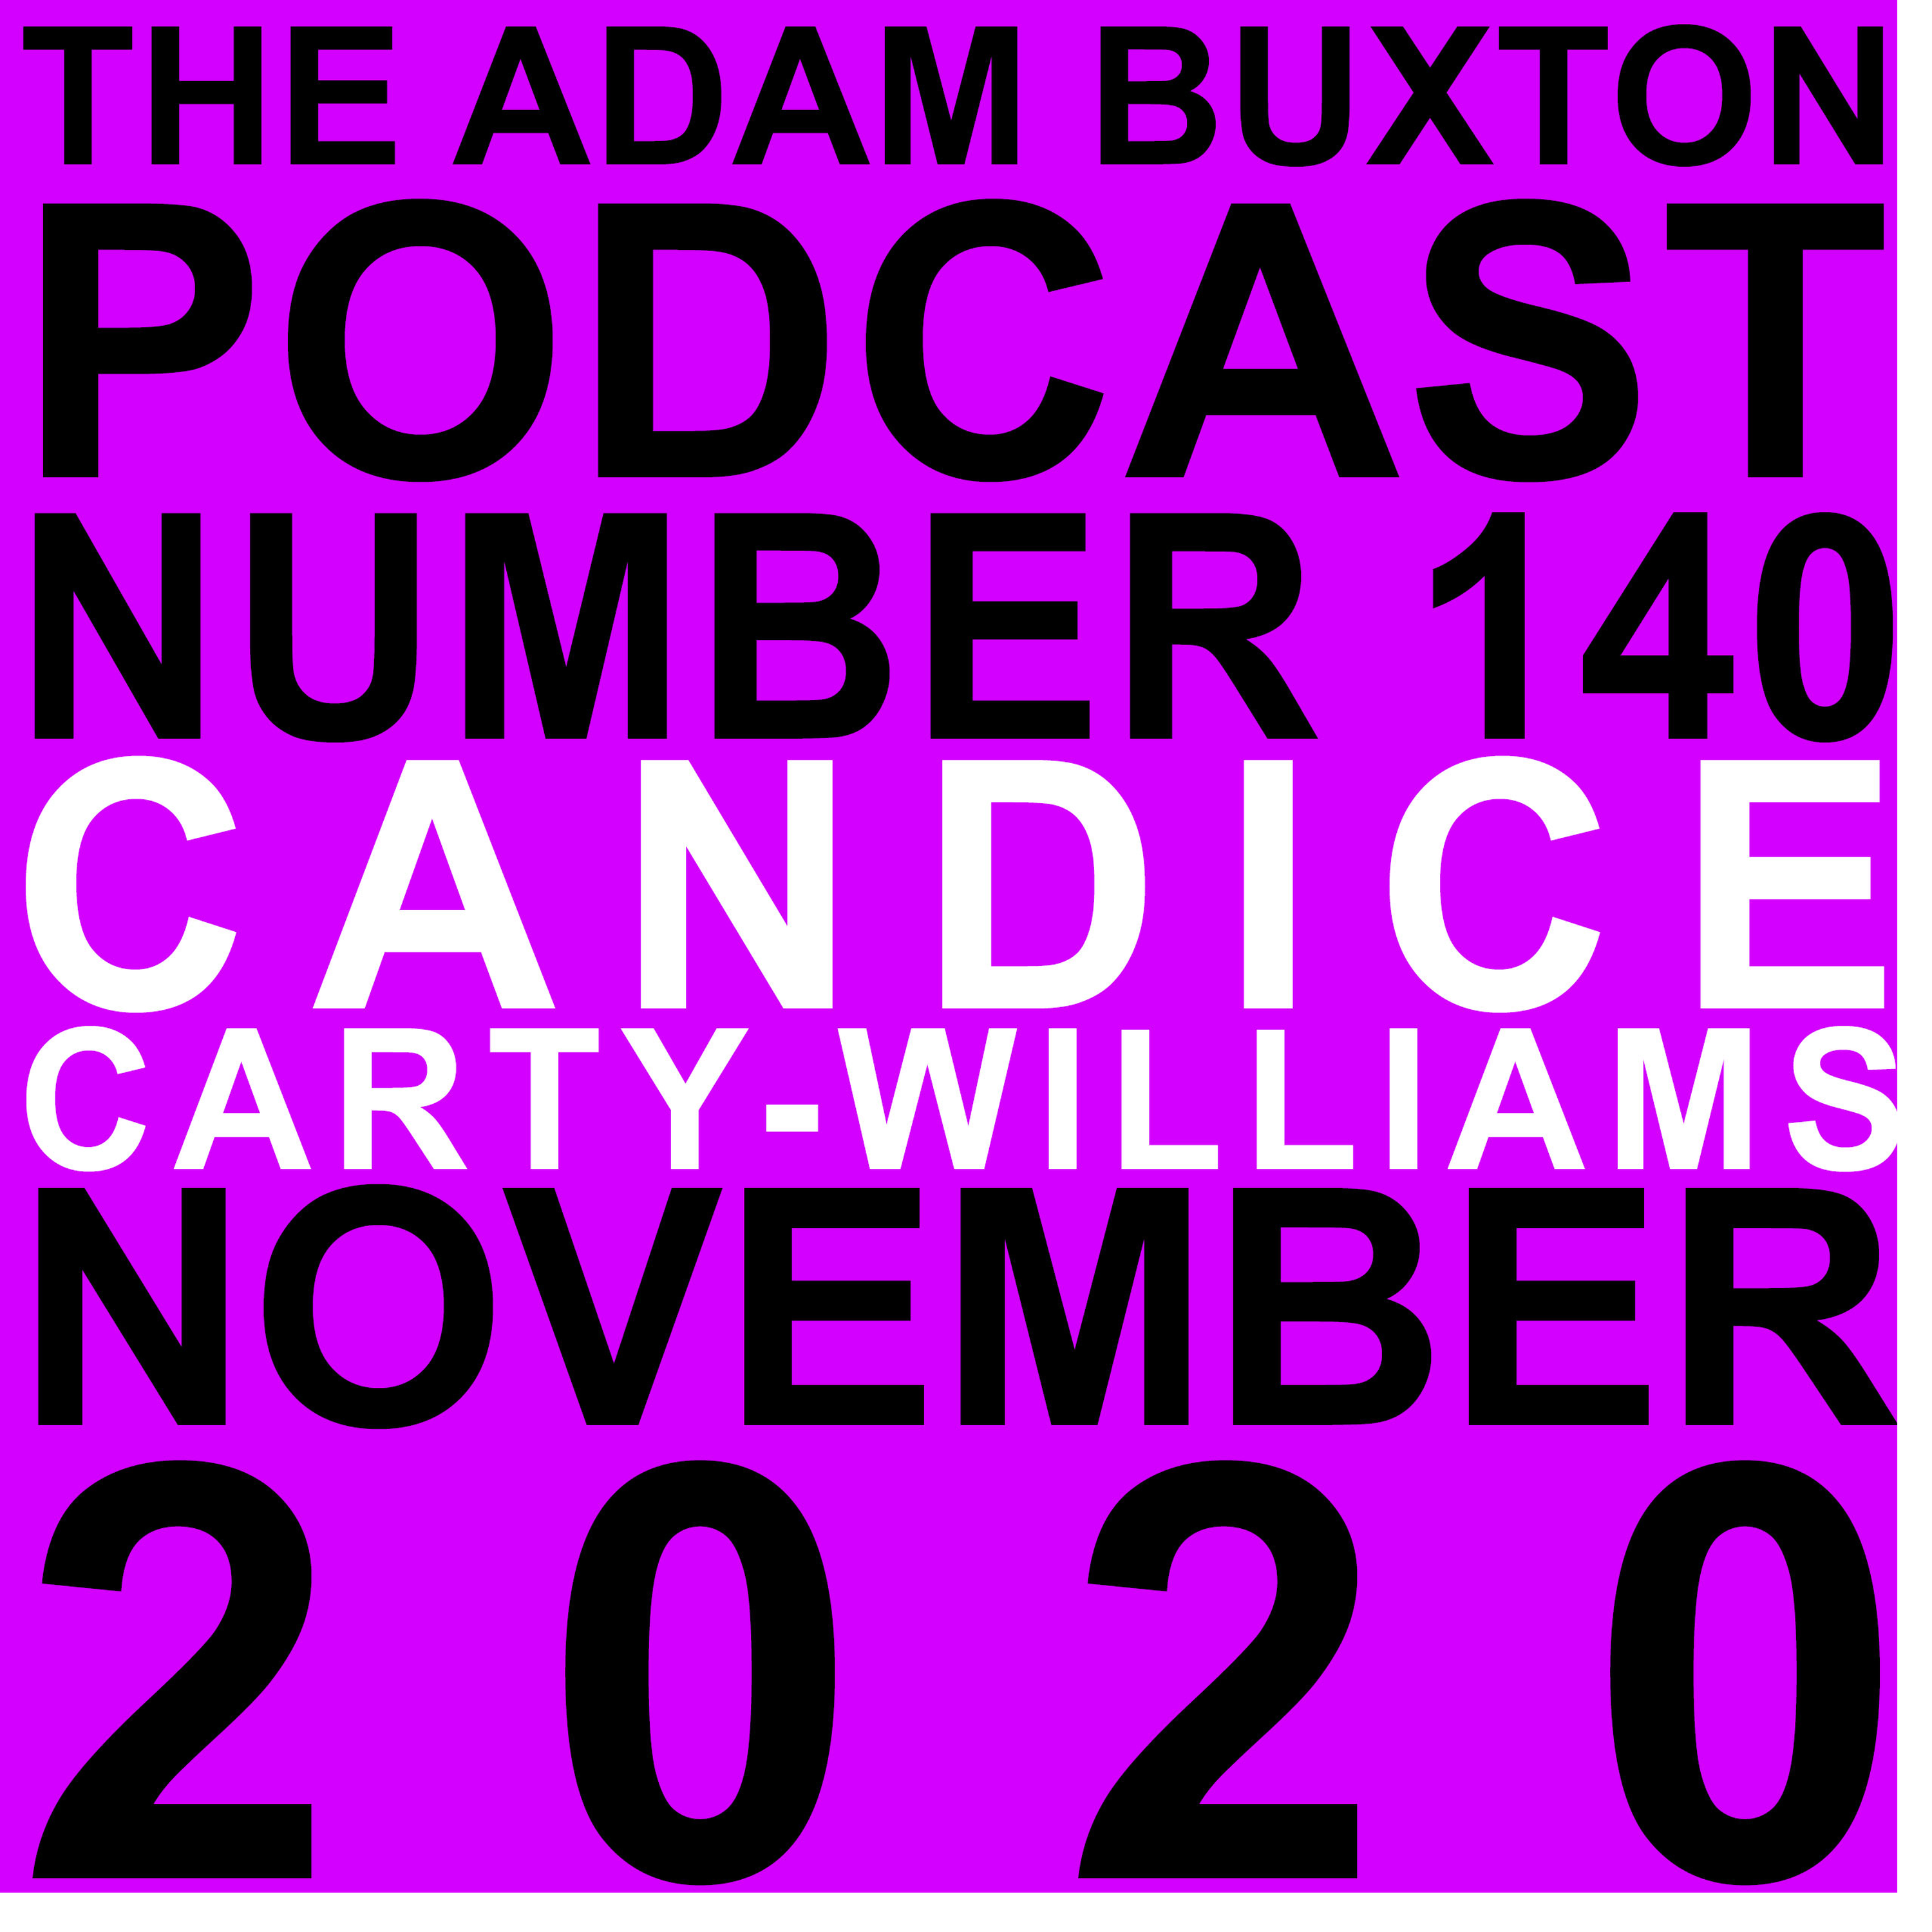 Lex Fridman Podcast (Podcast Series 2018– ) - IMDb